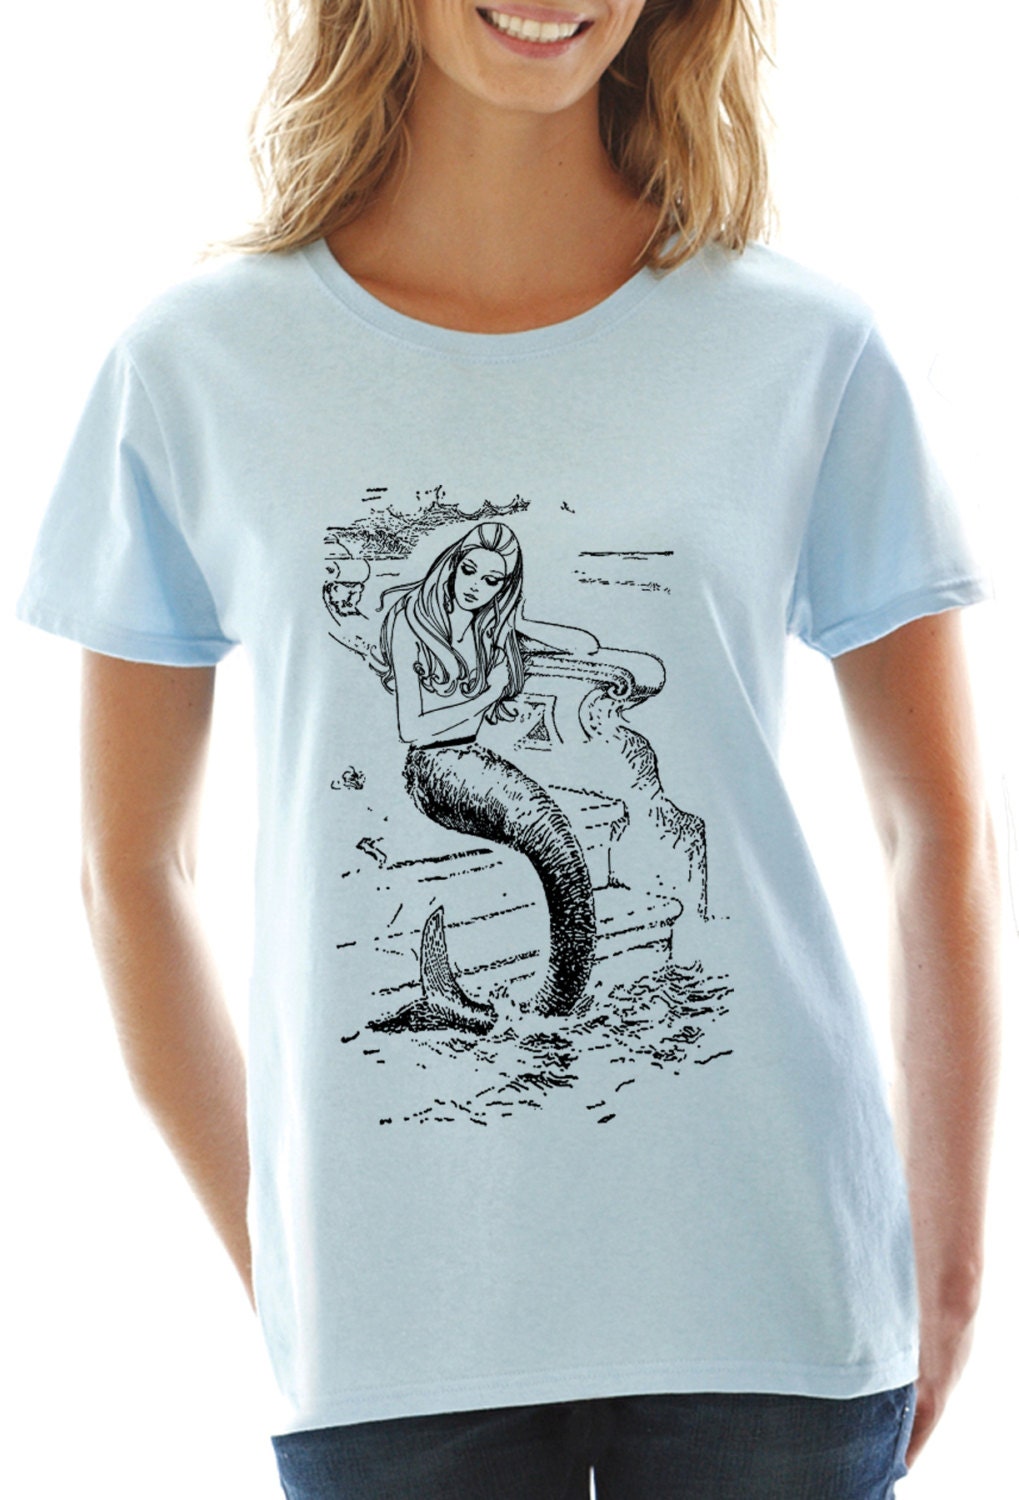 mermaid shirt vintage design MERMAID t-shirt women's